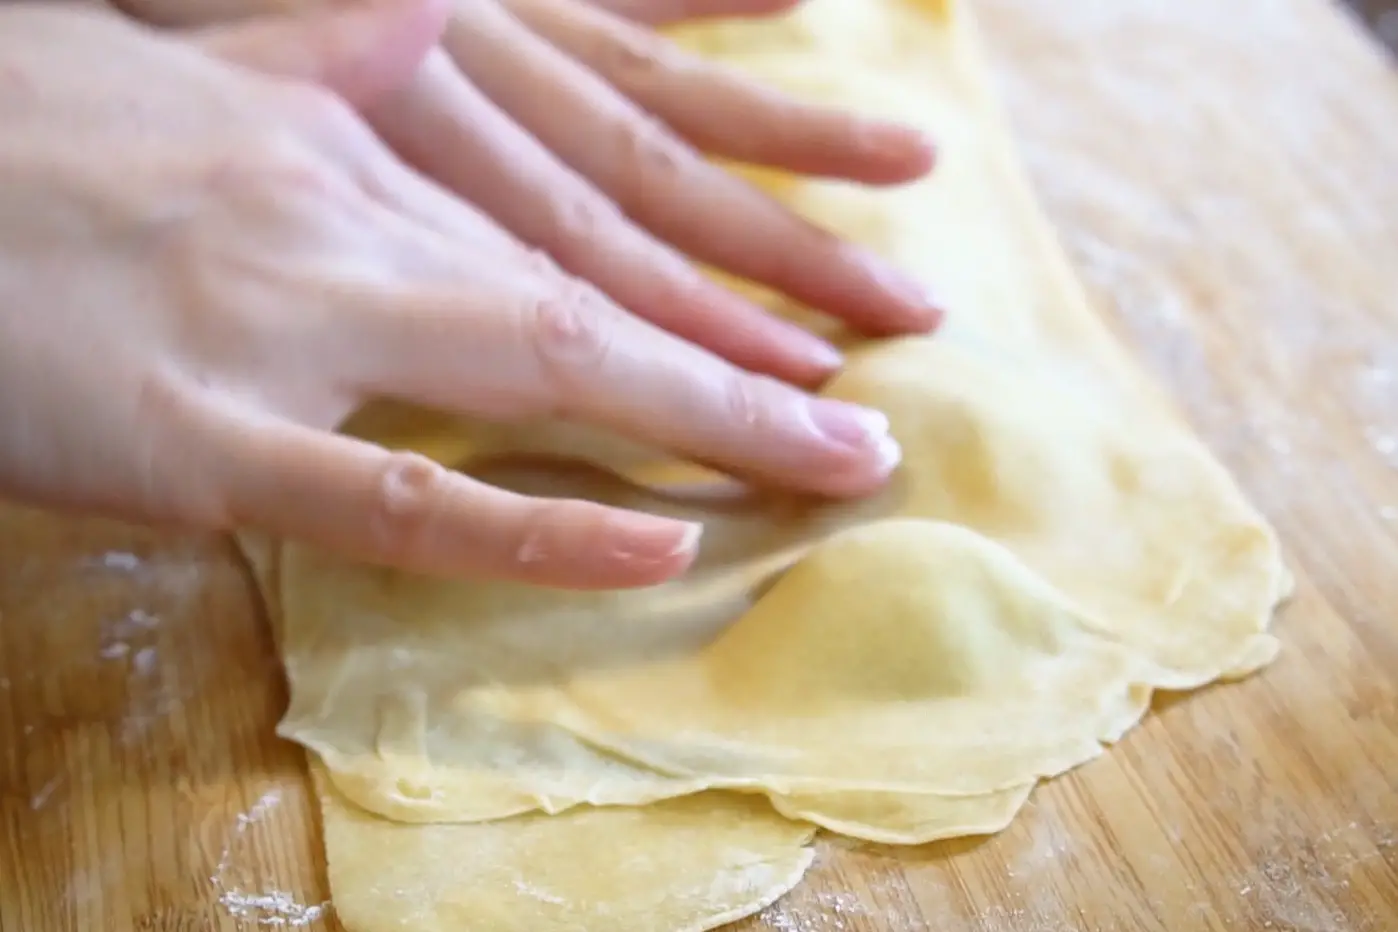 hands pressing the pasta around the ravioli filling